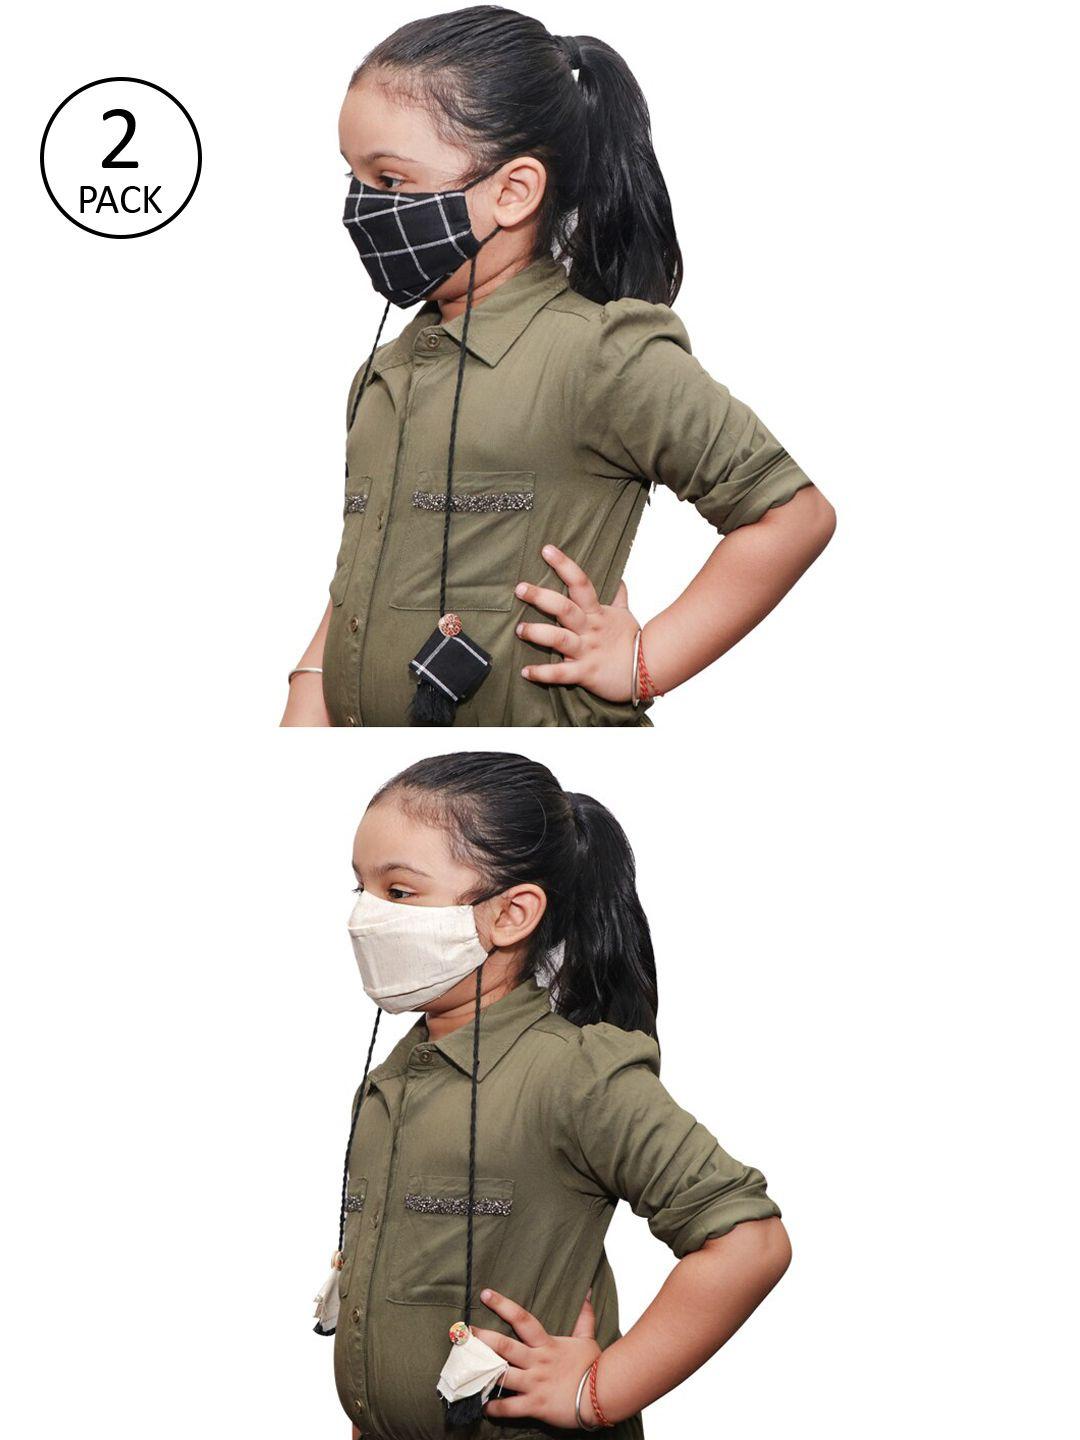 jbn creation kids pack of 2 black & off-white reusable 3-ply cloth masks